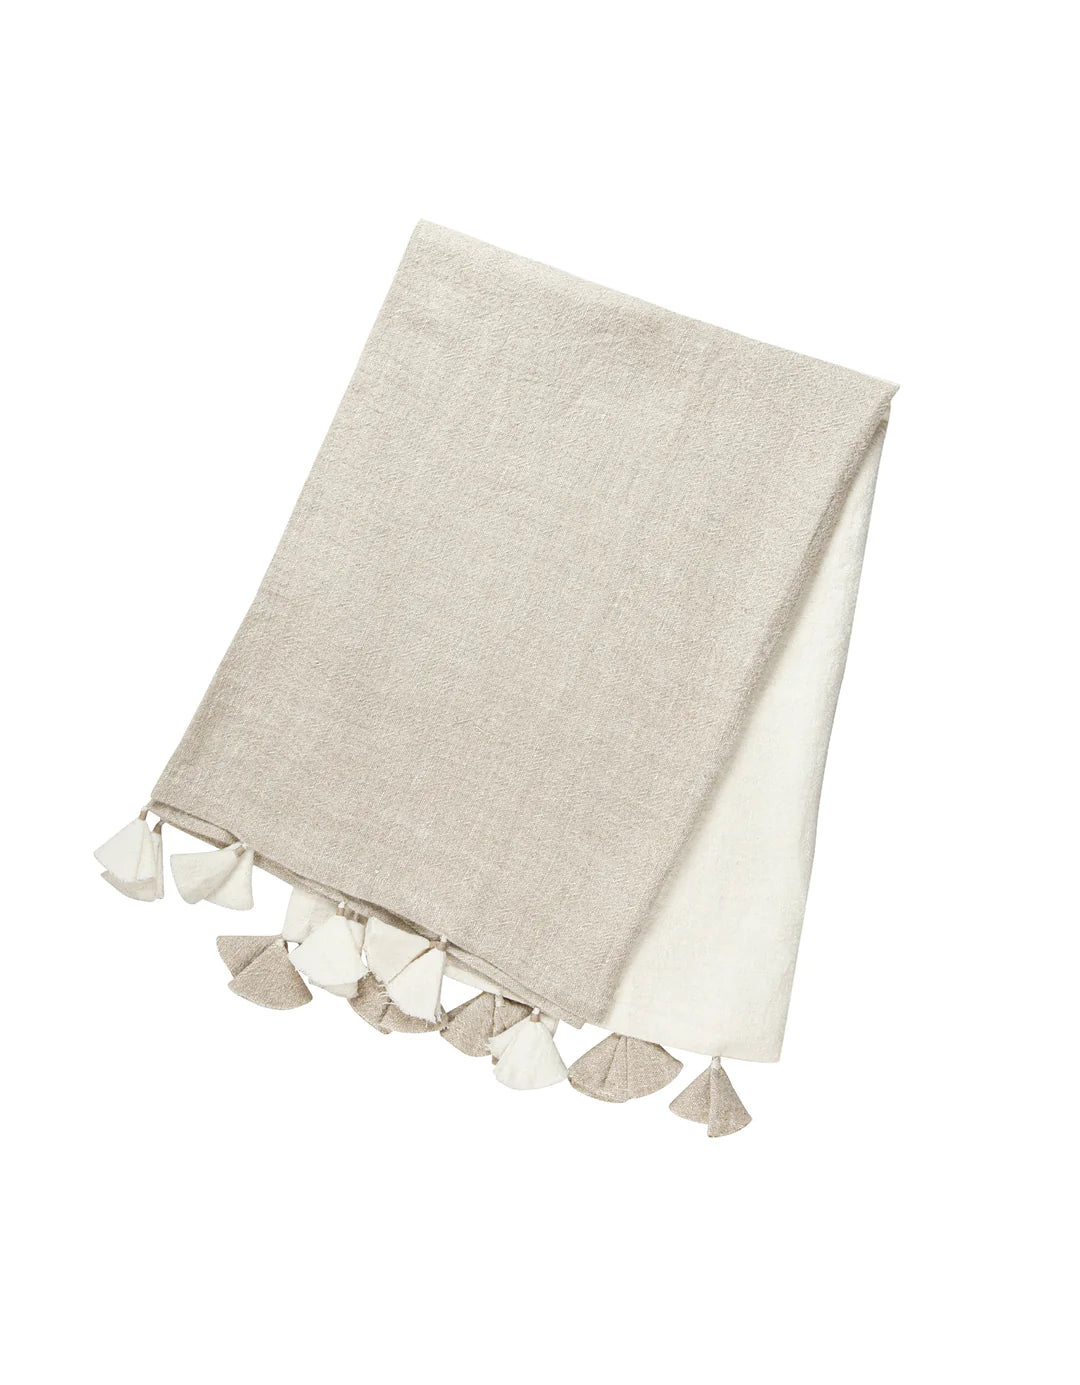 Natural Beige Colorblocked Linen Blanket with Tassels